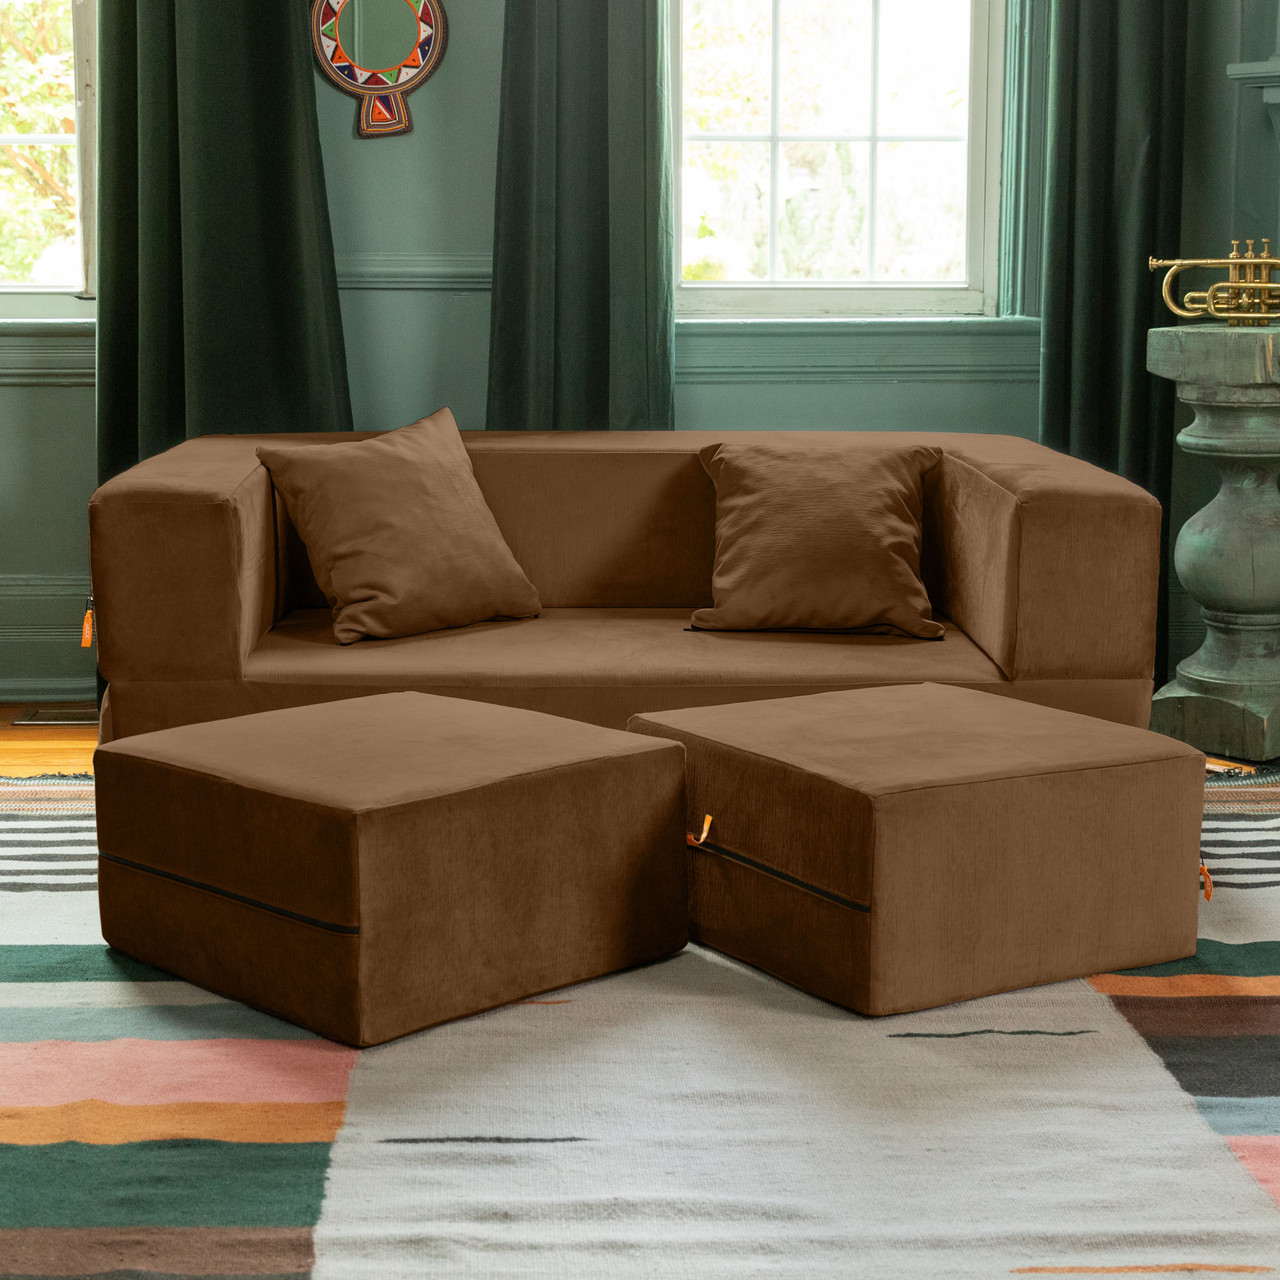 Jaxx® Kids Zipline Fold Out Sofa